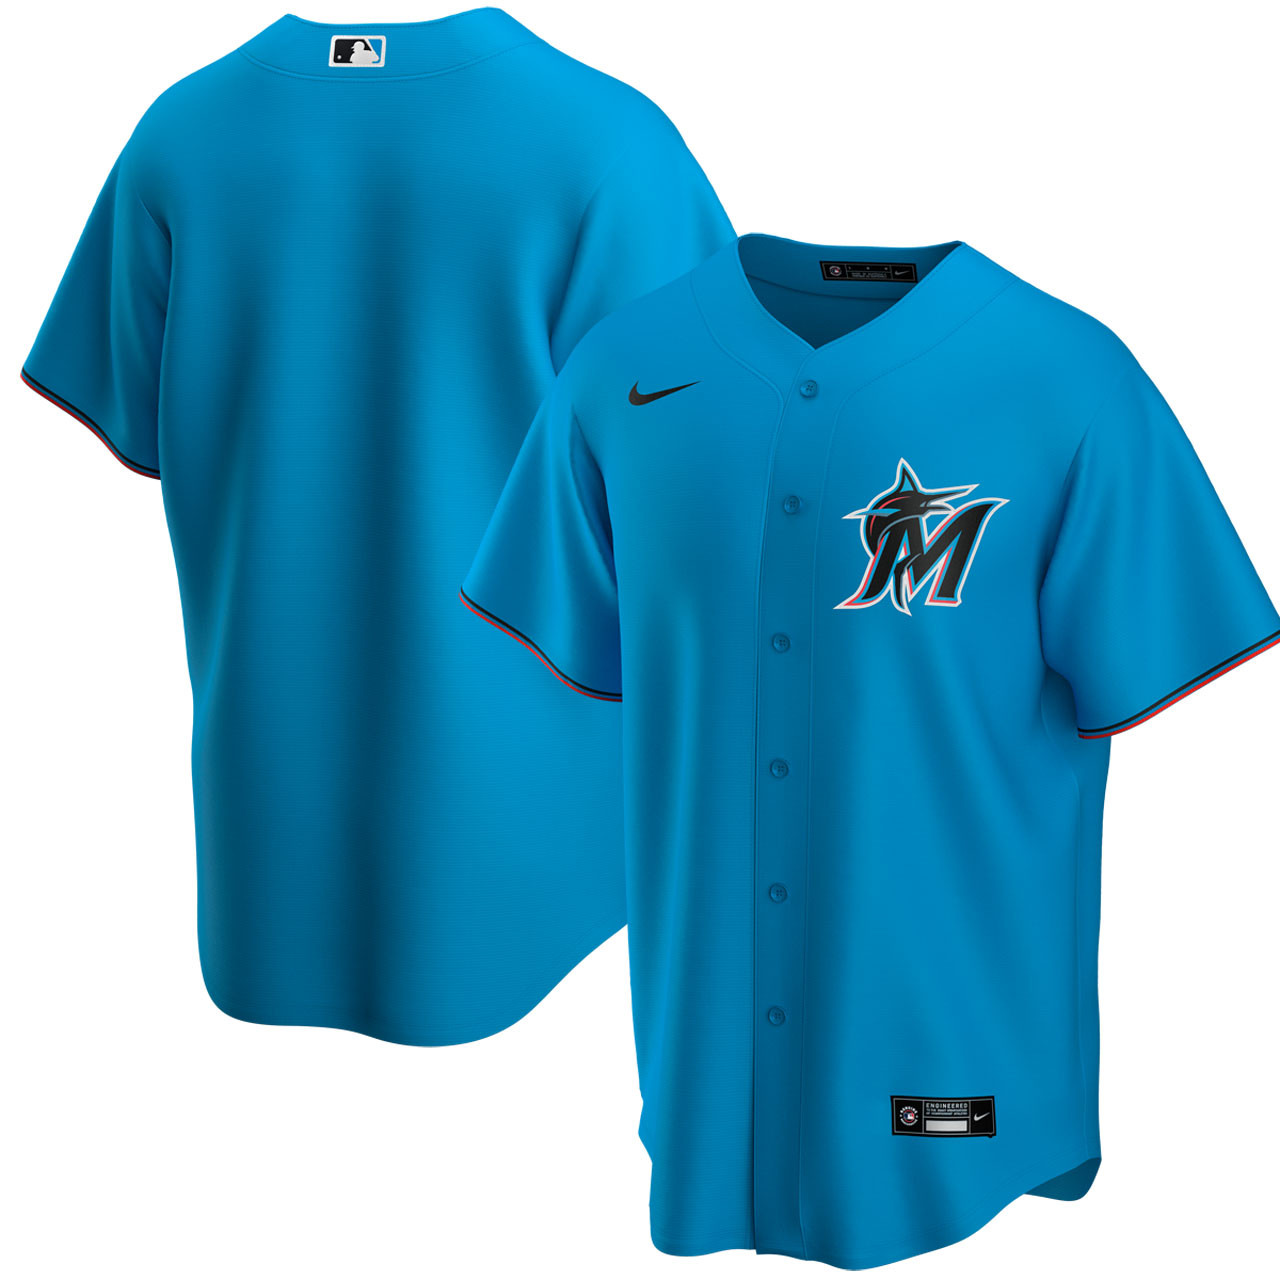 Miami Marlins Blue Alternate Jersey by Nike